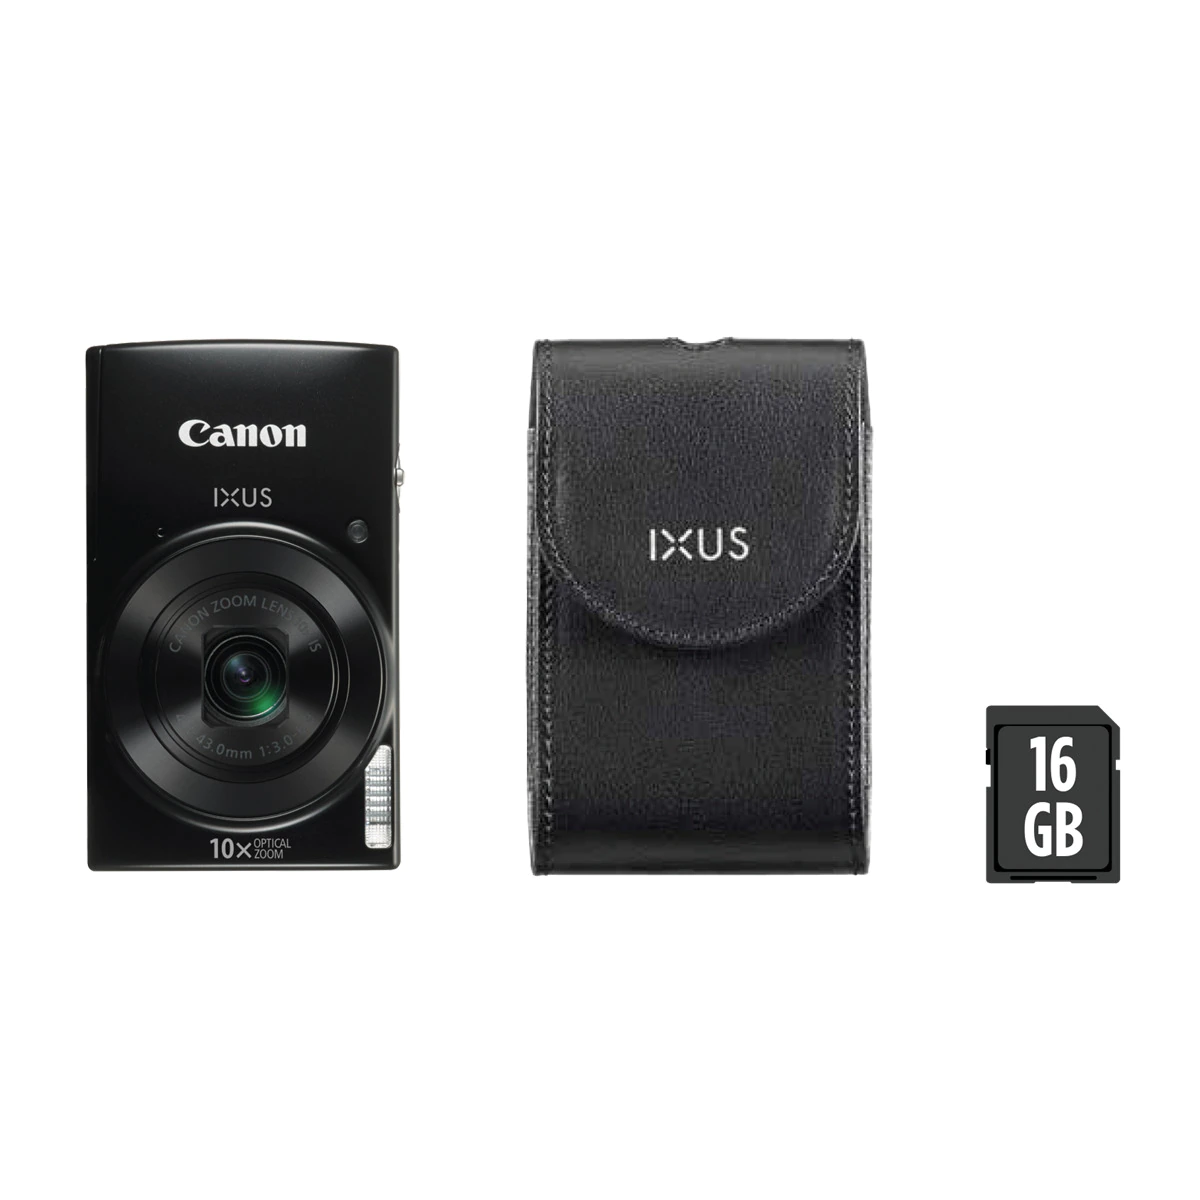 Cámara compacta Canon IXUS 190 Negra + funda y tarjeta SD 16GB